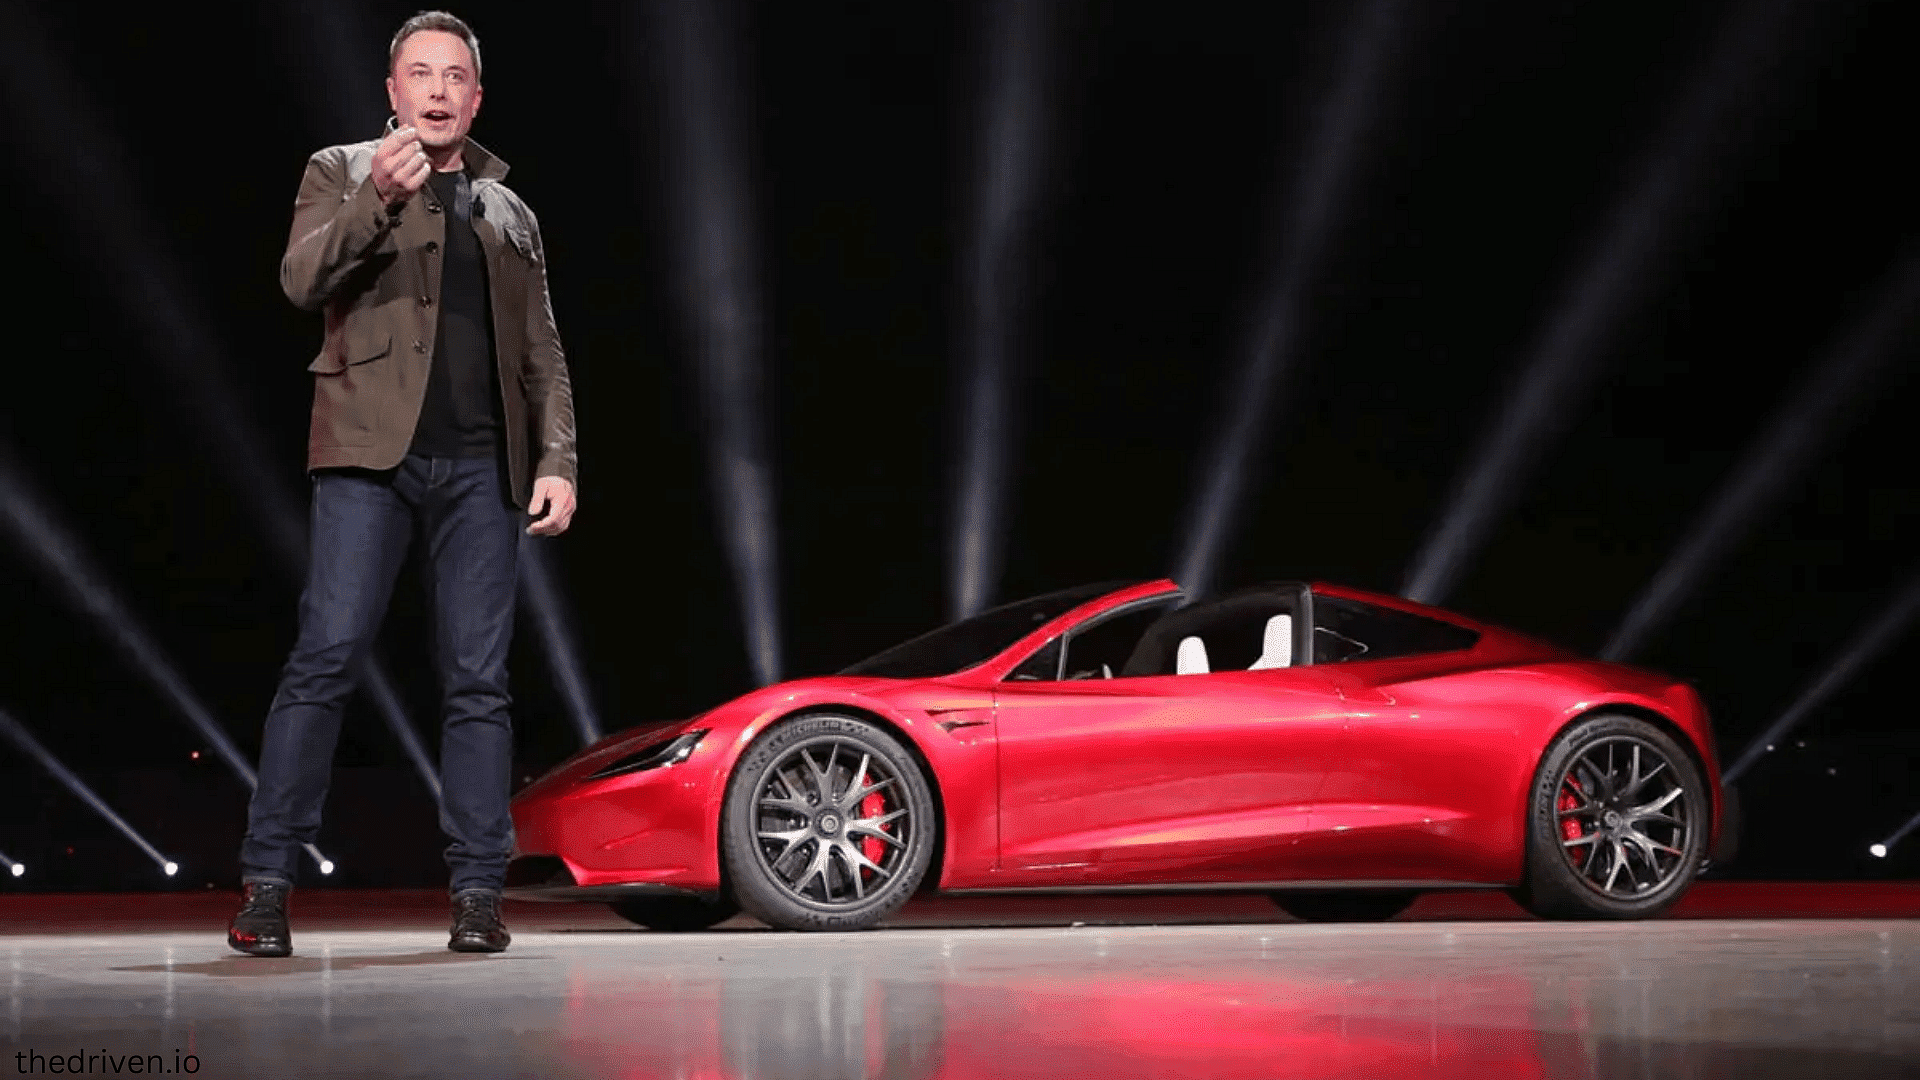 Elon Musk's 2008 red Tesla Roadster